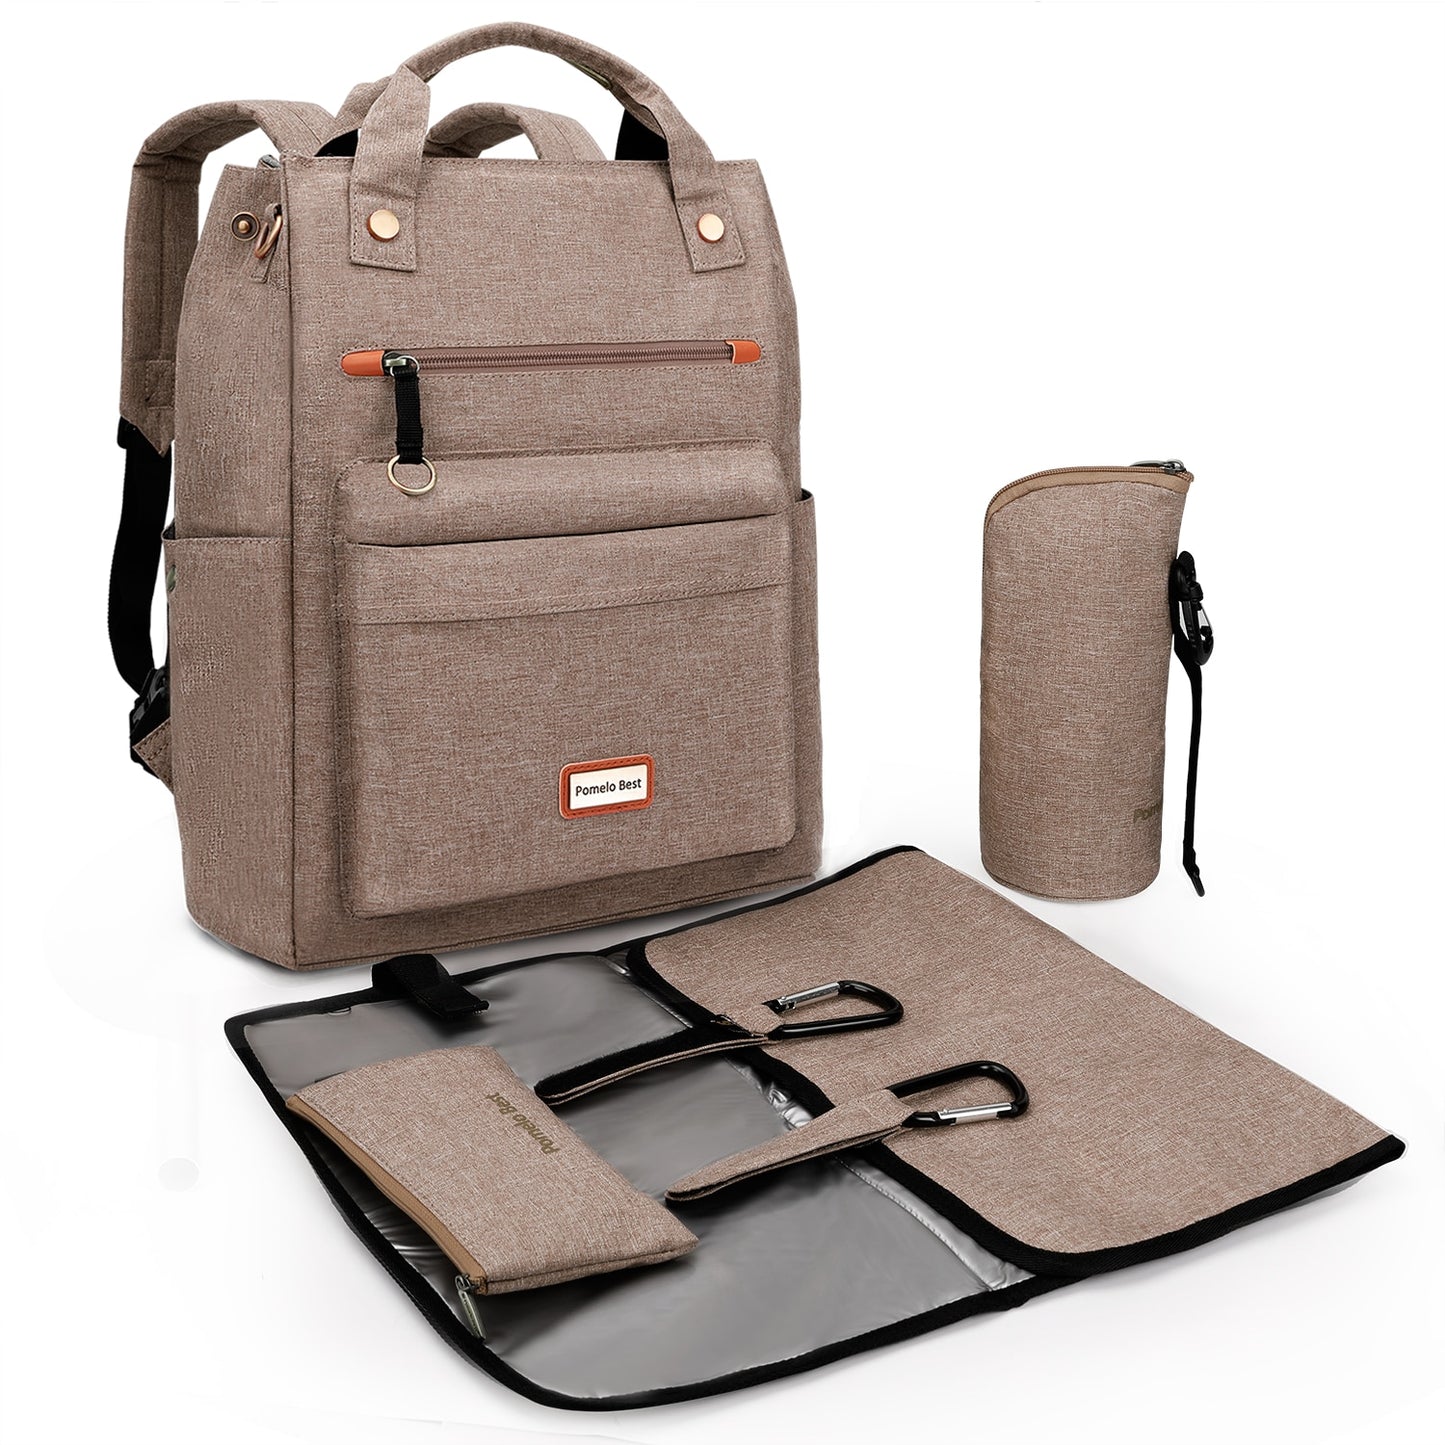 Versatile Diaper Bag Backpack with Hidden Shoulder Straps and Tons of Pockets